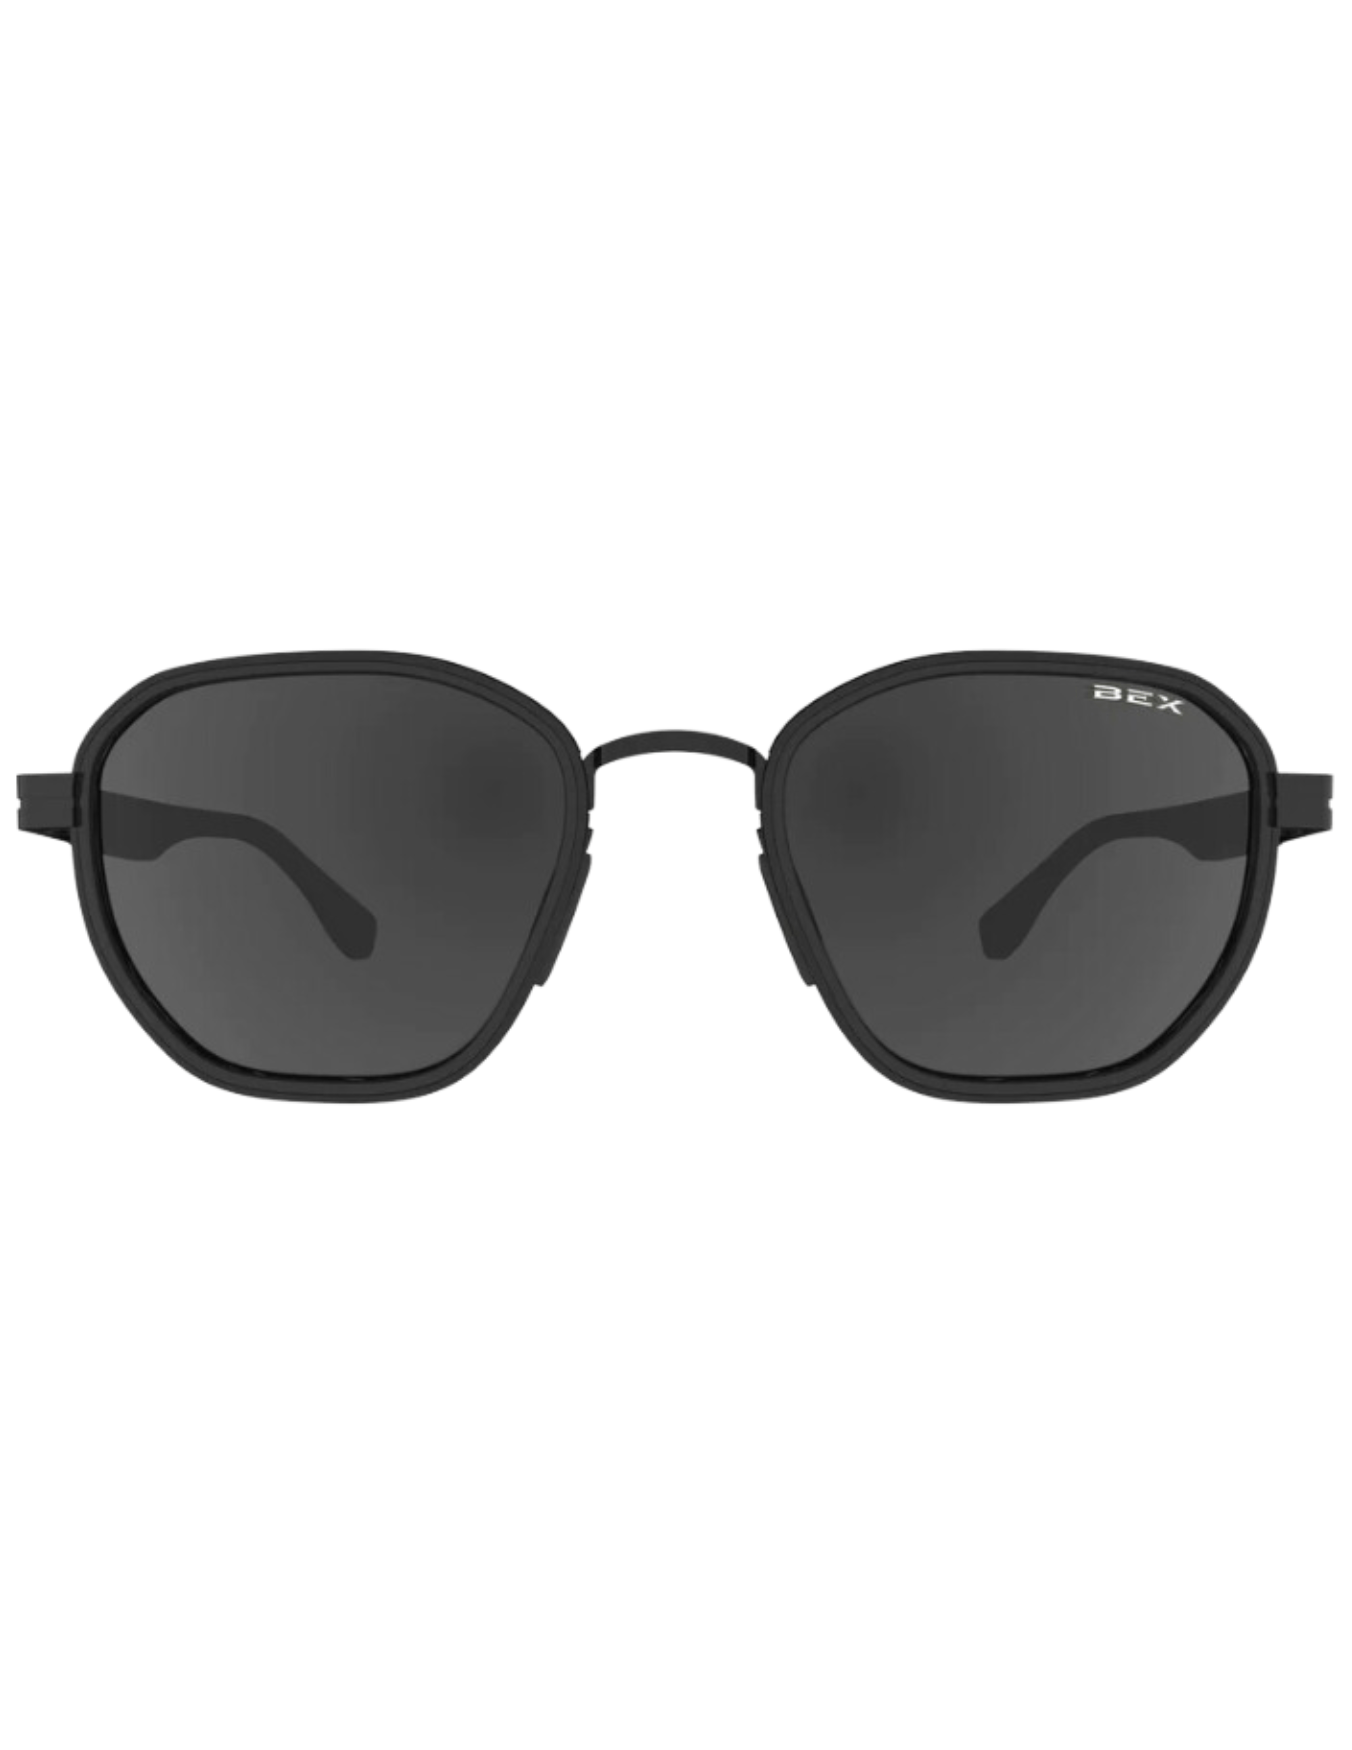 Bex Sable Sunglasses